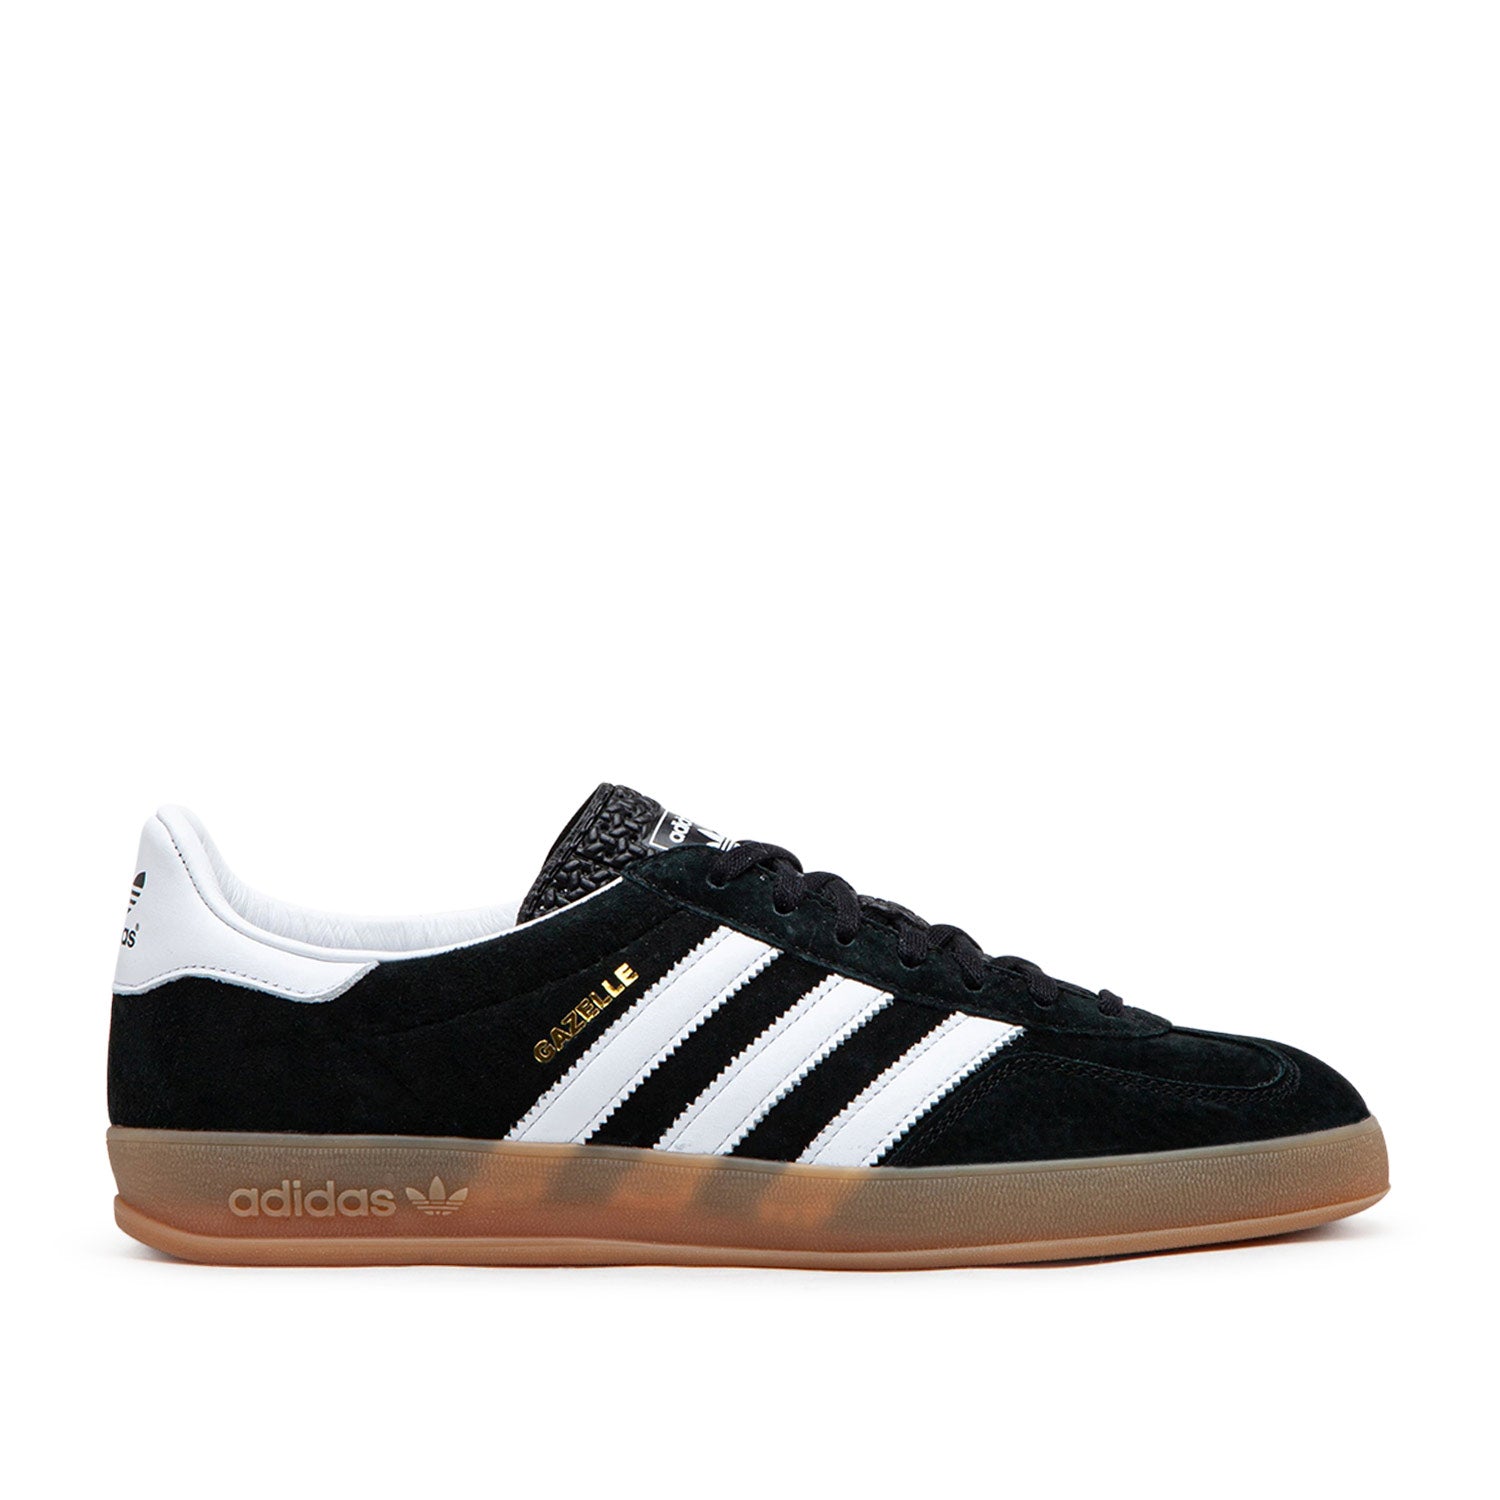 adidas Gazelle Indoor (Black / White) H06259 - Allike Store